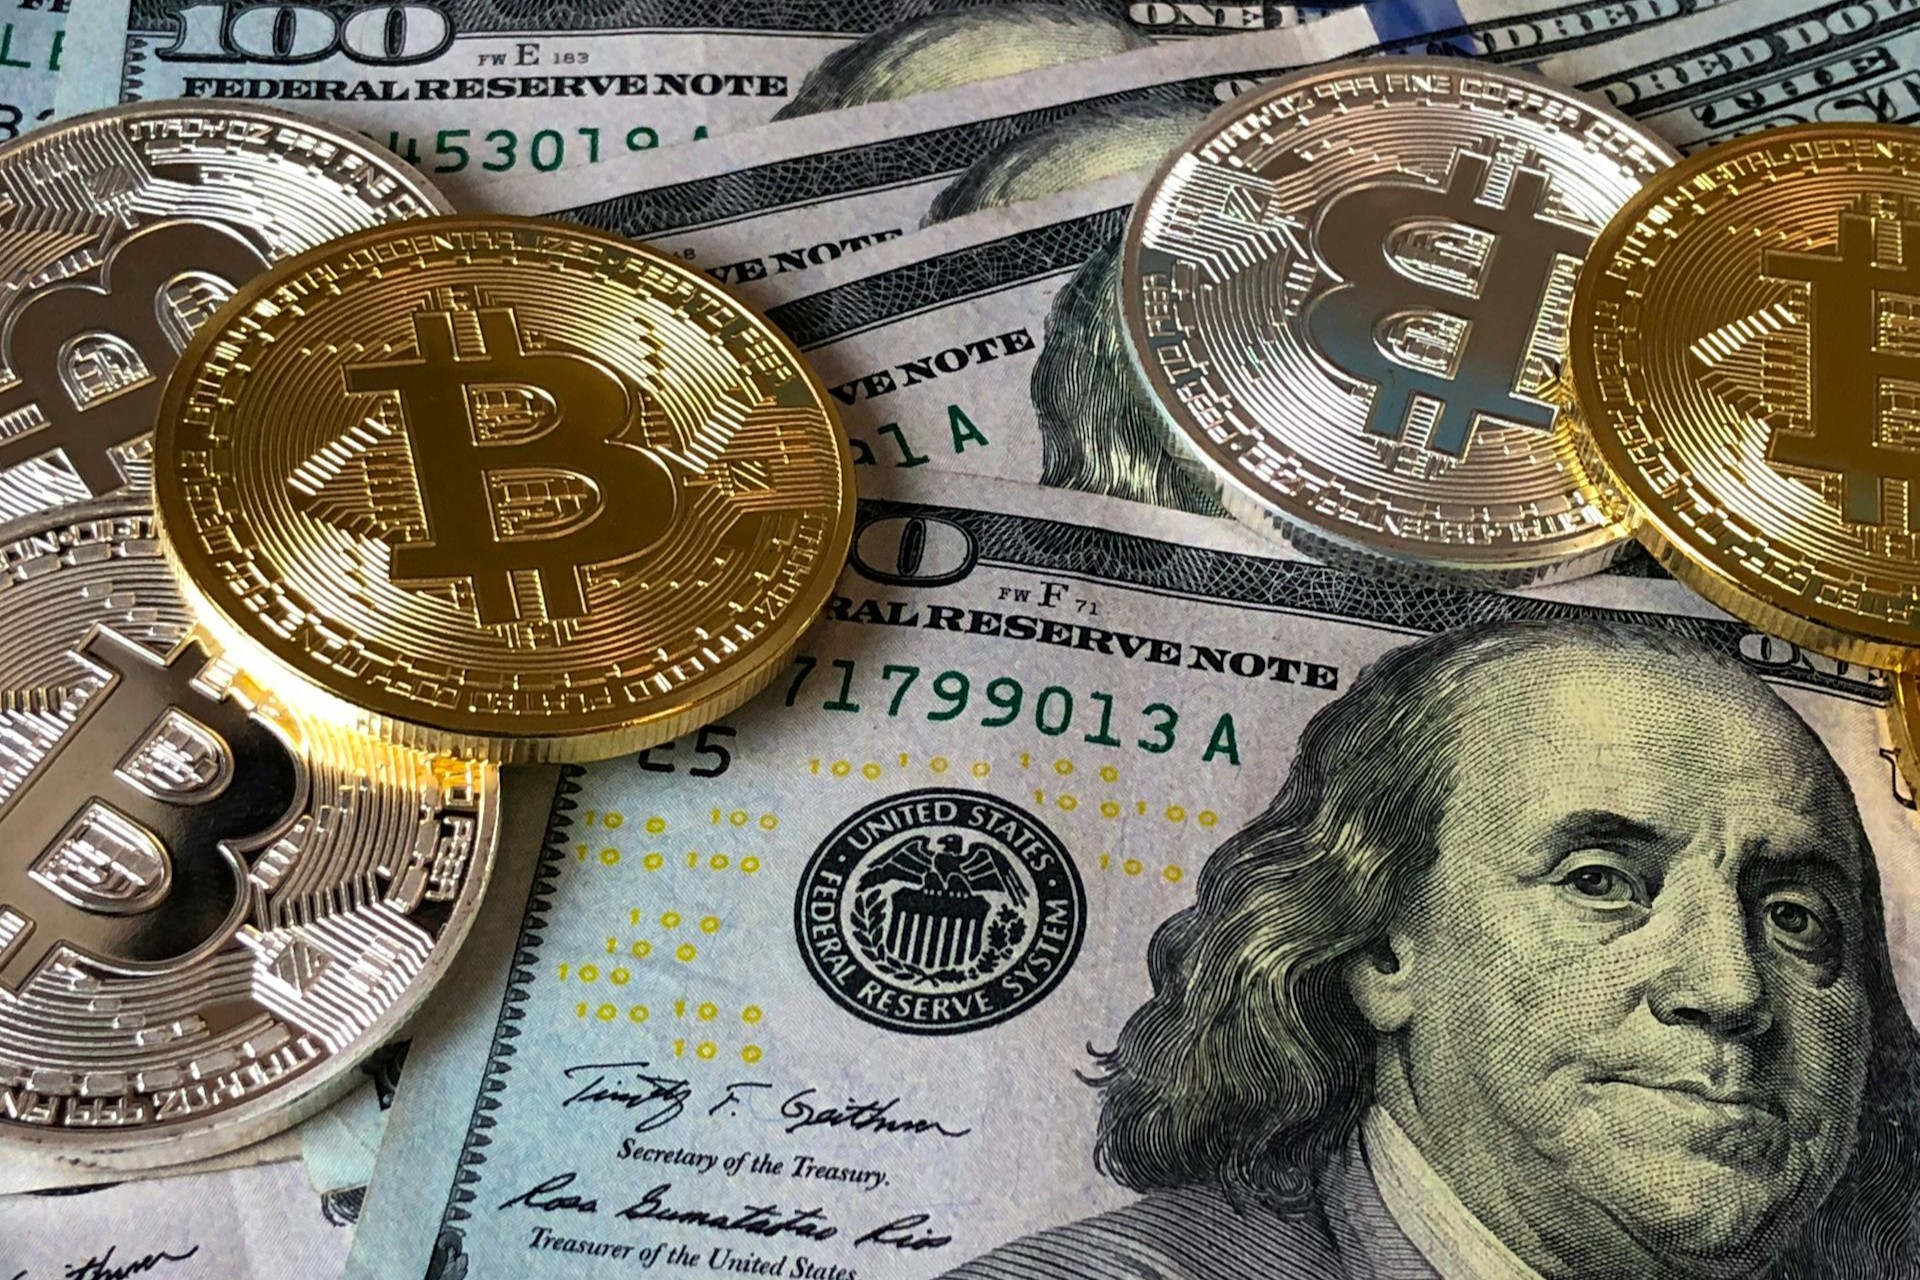 How does Bitcoin make money?